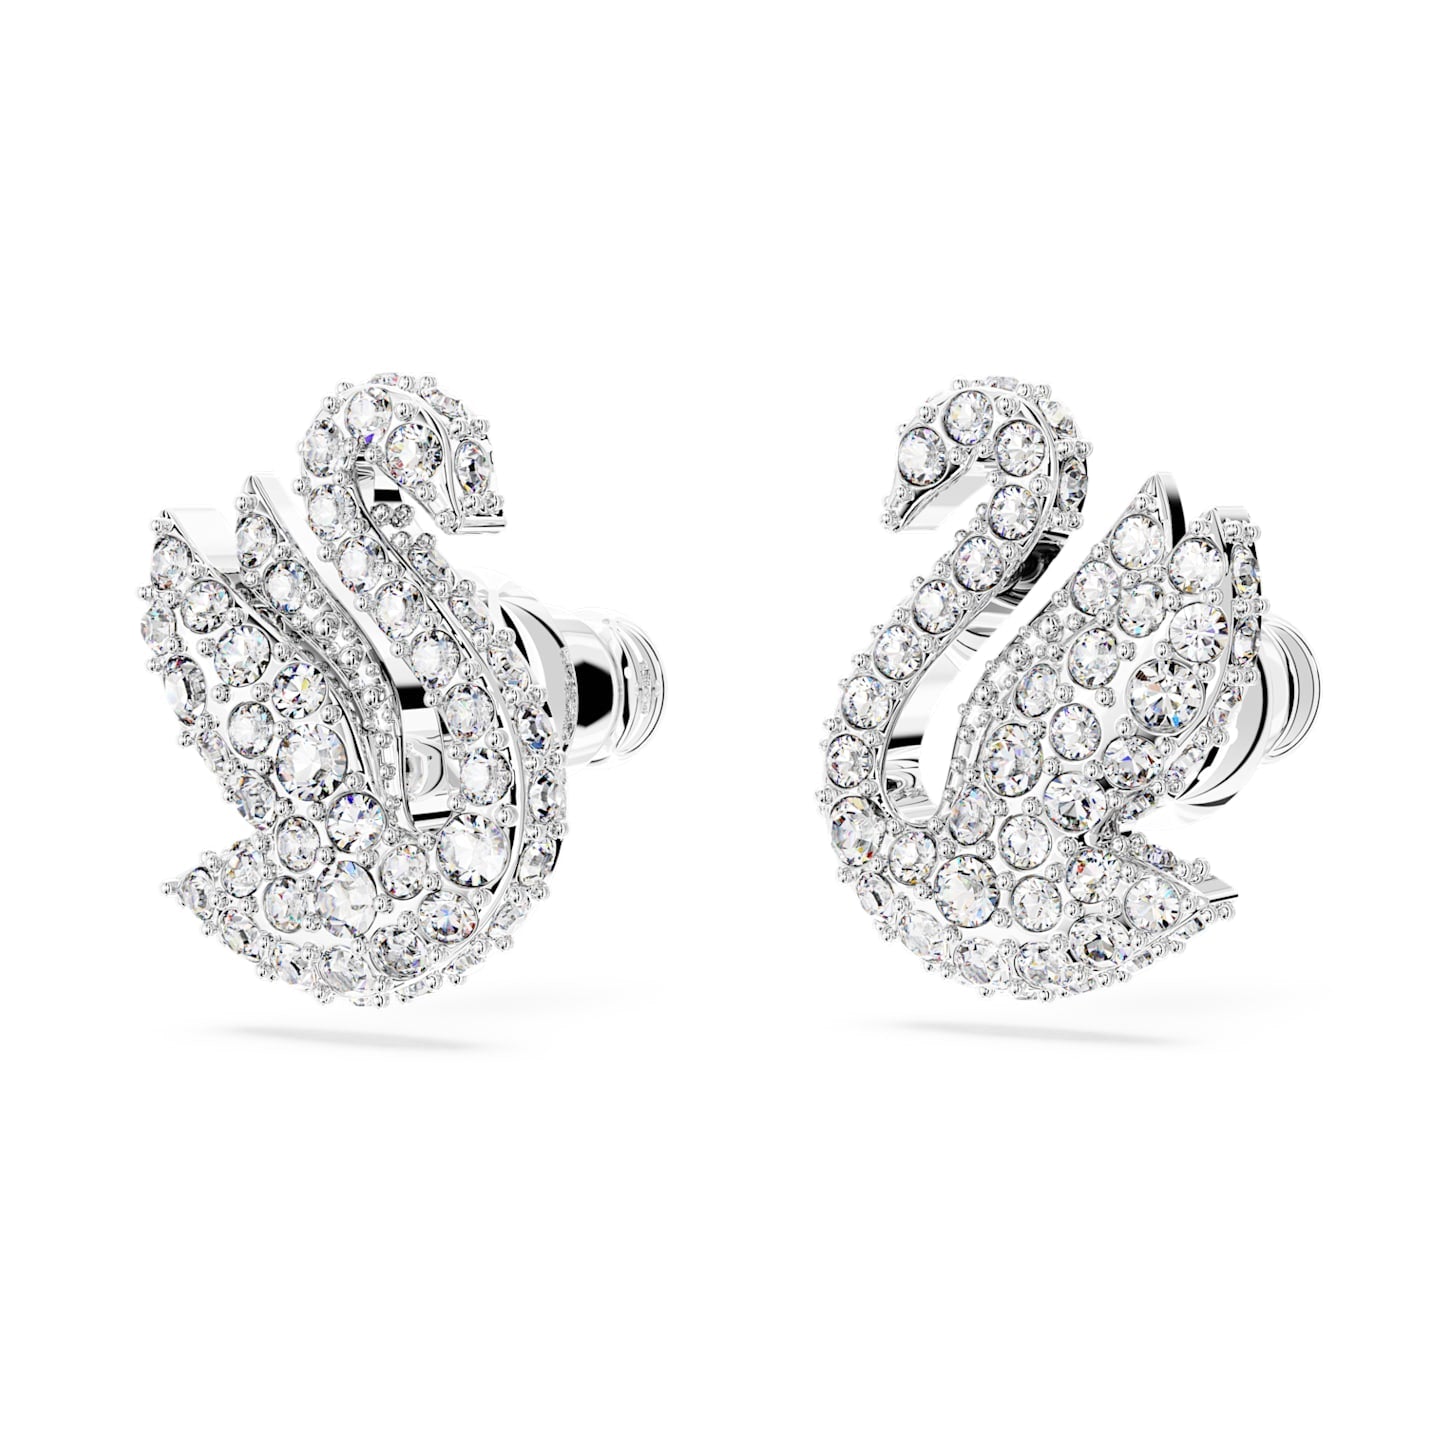 Iconic Swan - White Silver - Stud earrings - Swarovski